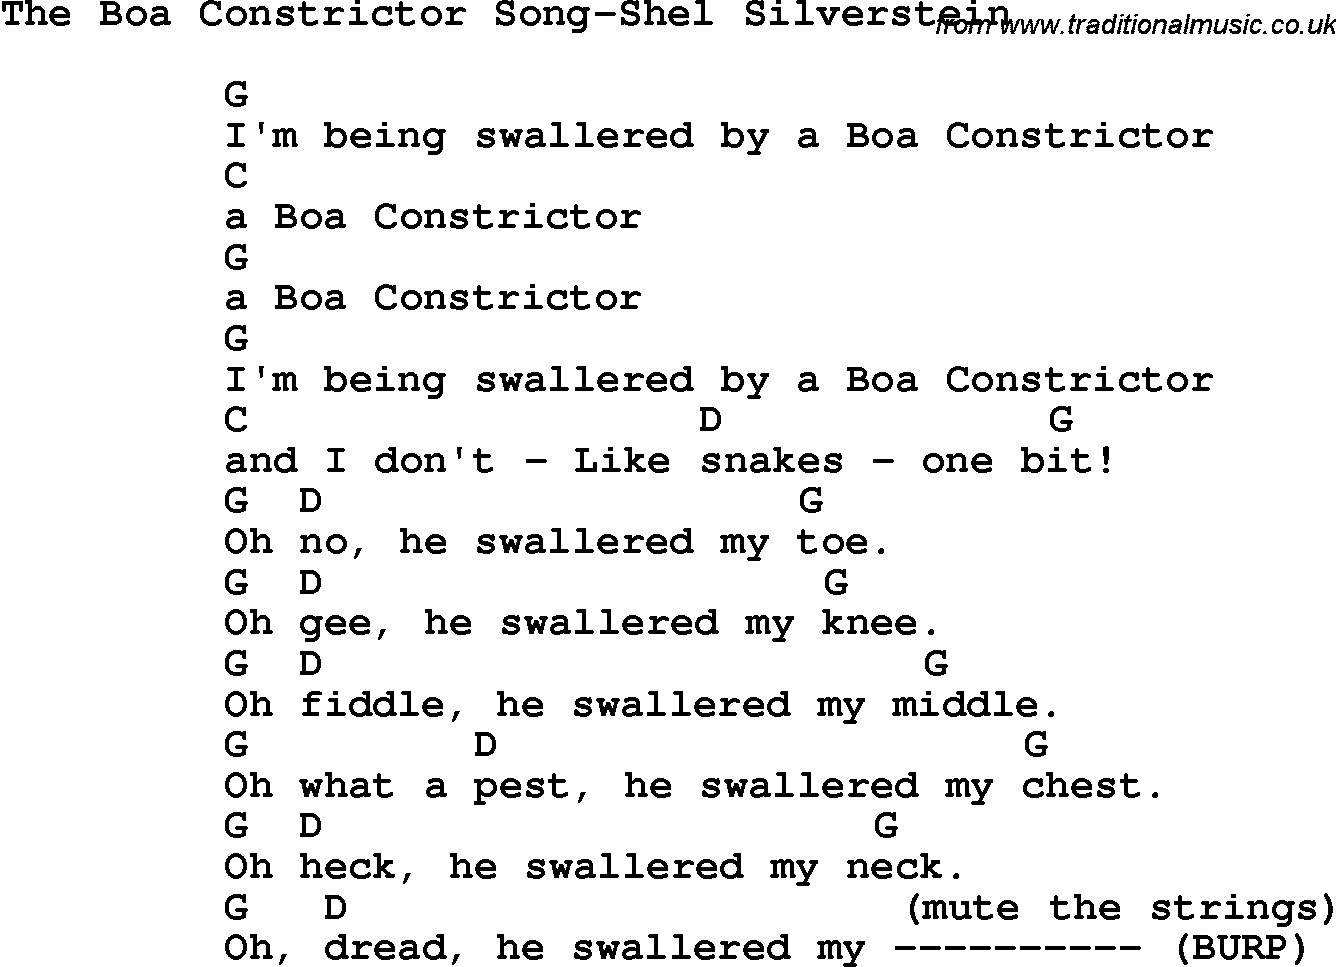 Novelty song: The Boa Constrictor Song-Shel Silverstein lyrics